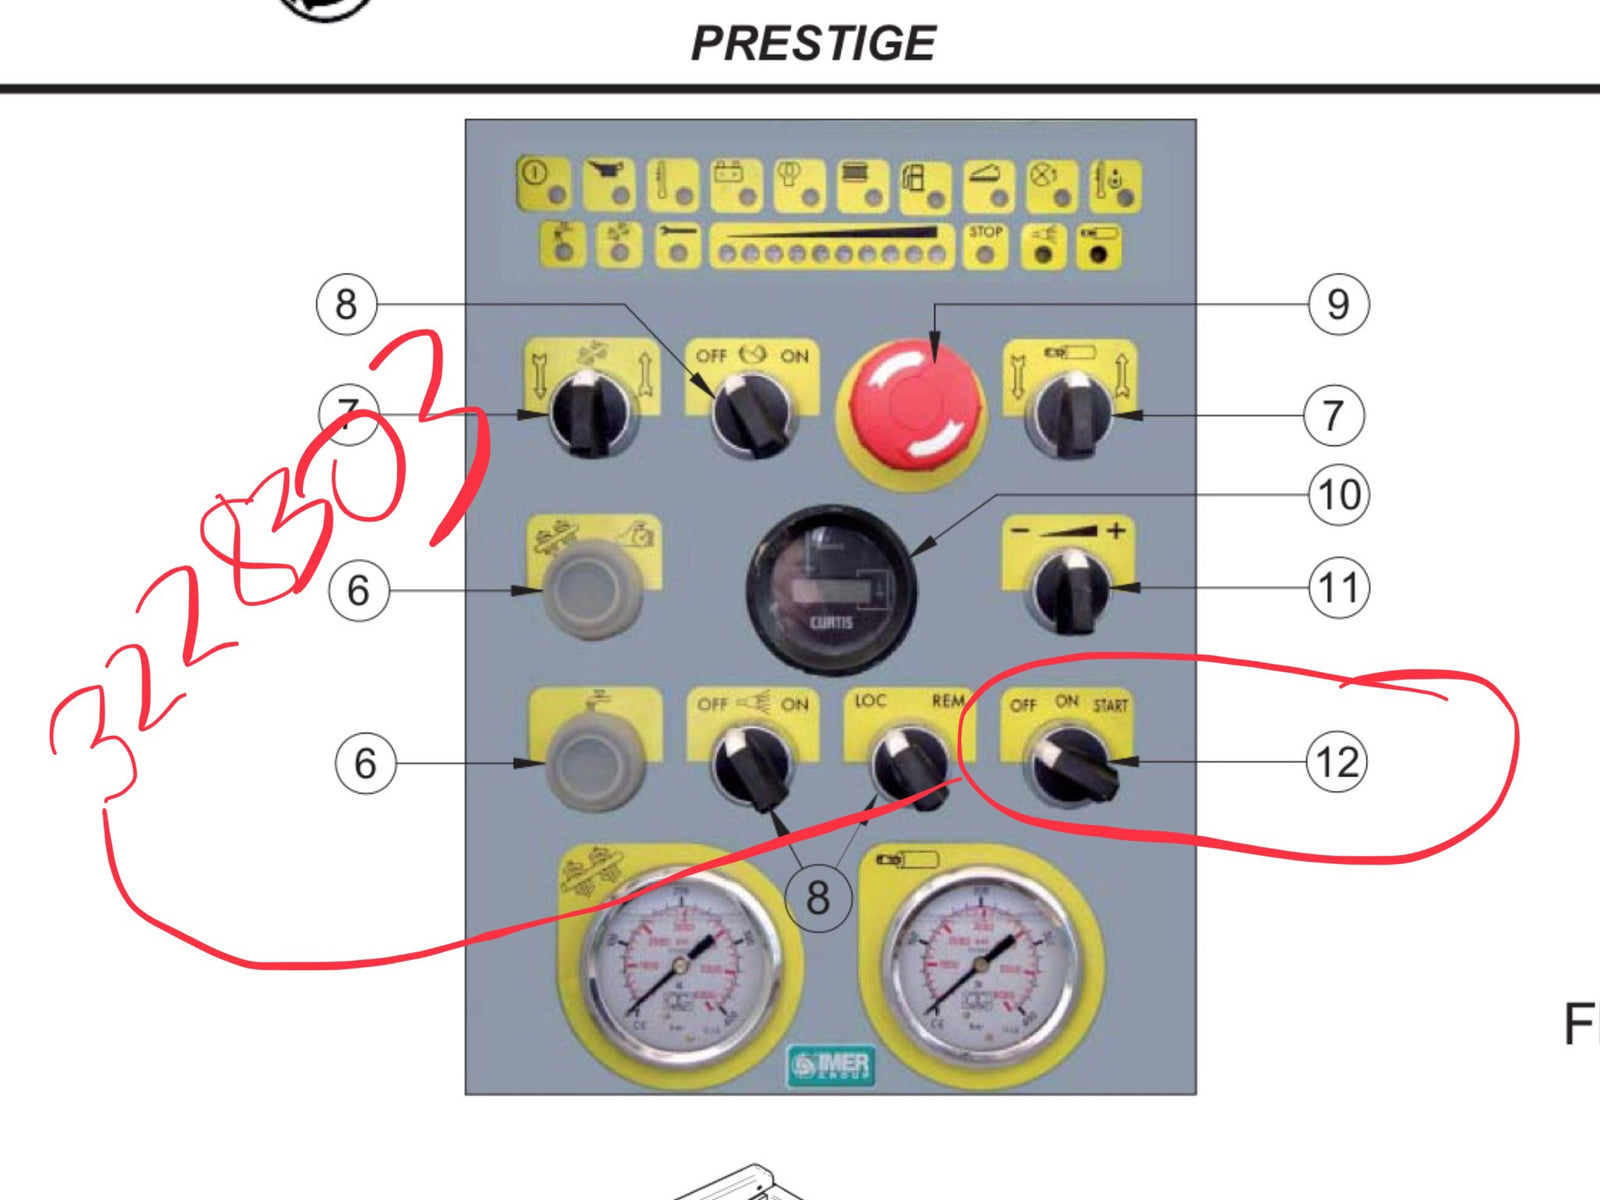 IMER Part Number 3228303 ON/Off Switch (3 position) Control Panel IMER Prestige Pump